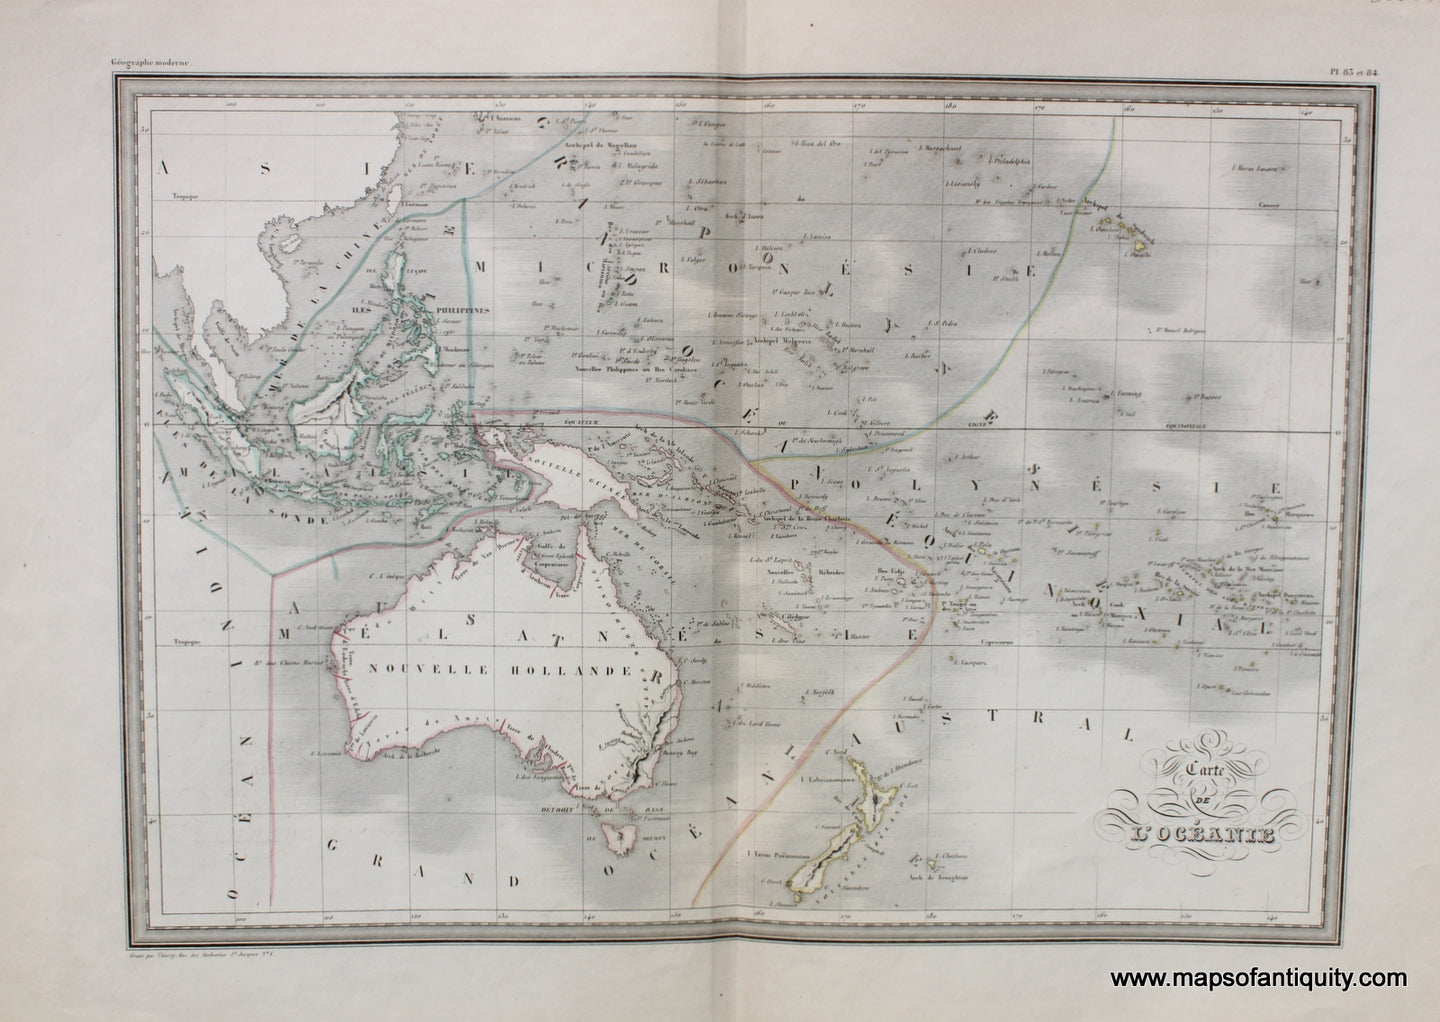 Antique-Hand-Colored-Map-Carte-de-l'Oceanie.-(Carte-de-grandeur-double.)-Oceania--1842-Malte-Brun-Maps-Of-Antiquity